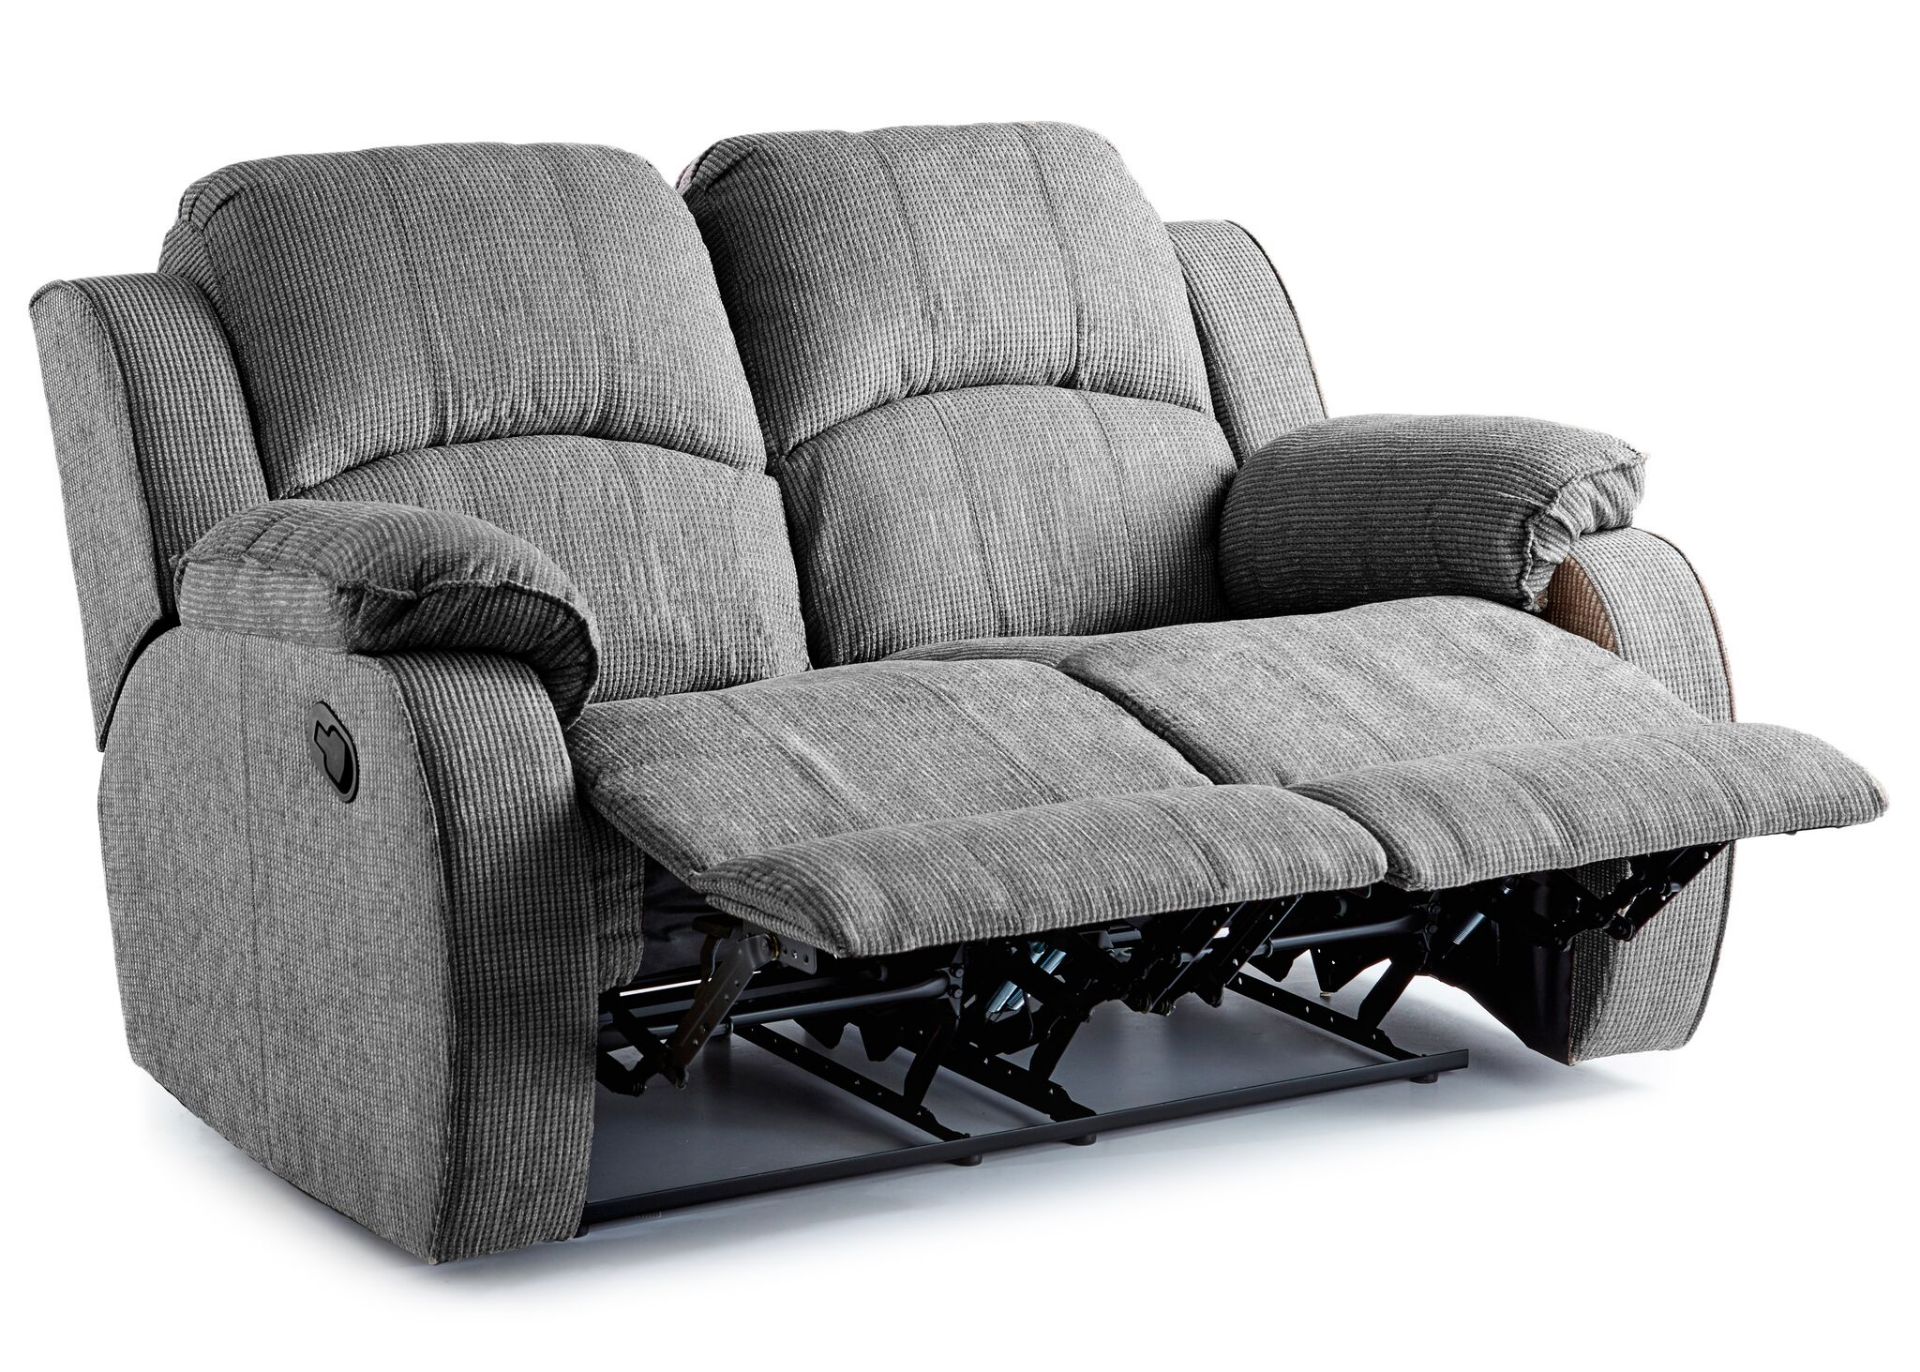 1x Brand New Buckingham 2 Seater Sofa in Graphite Tweed